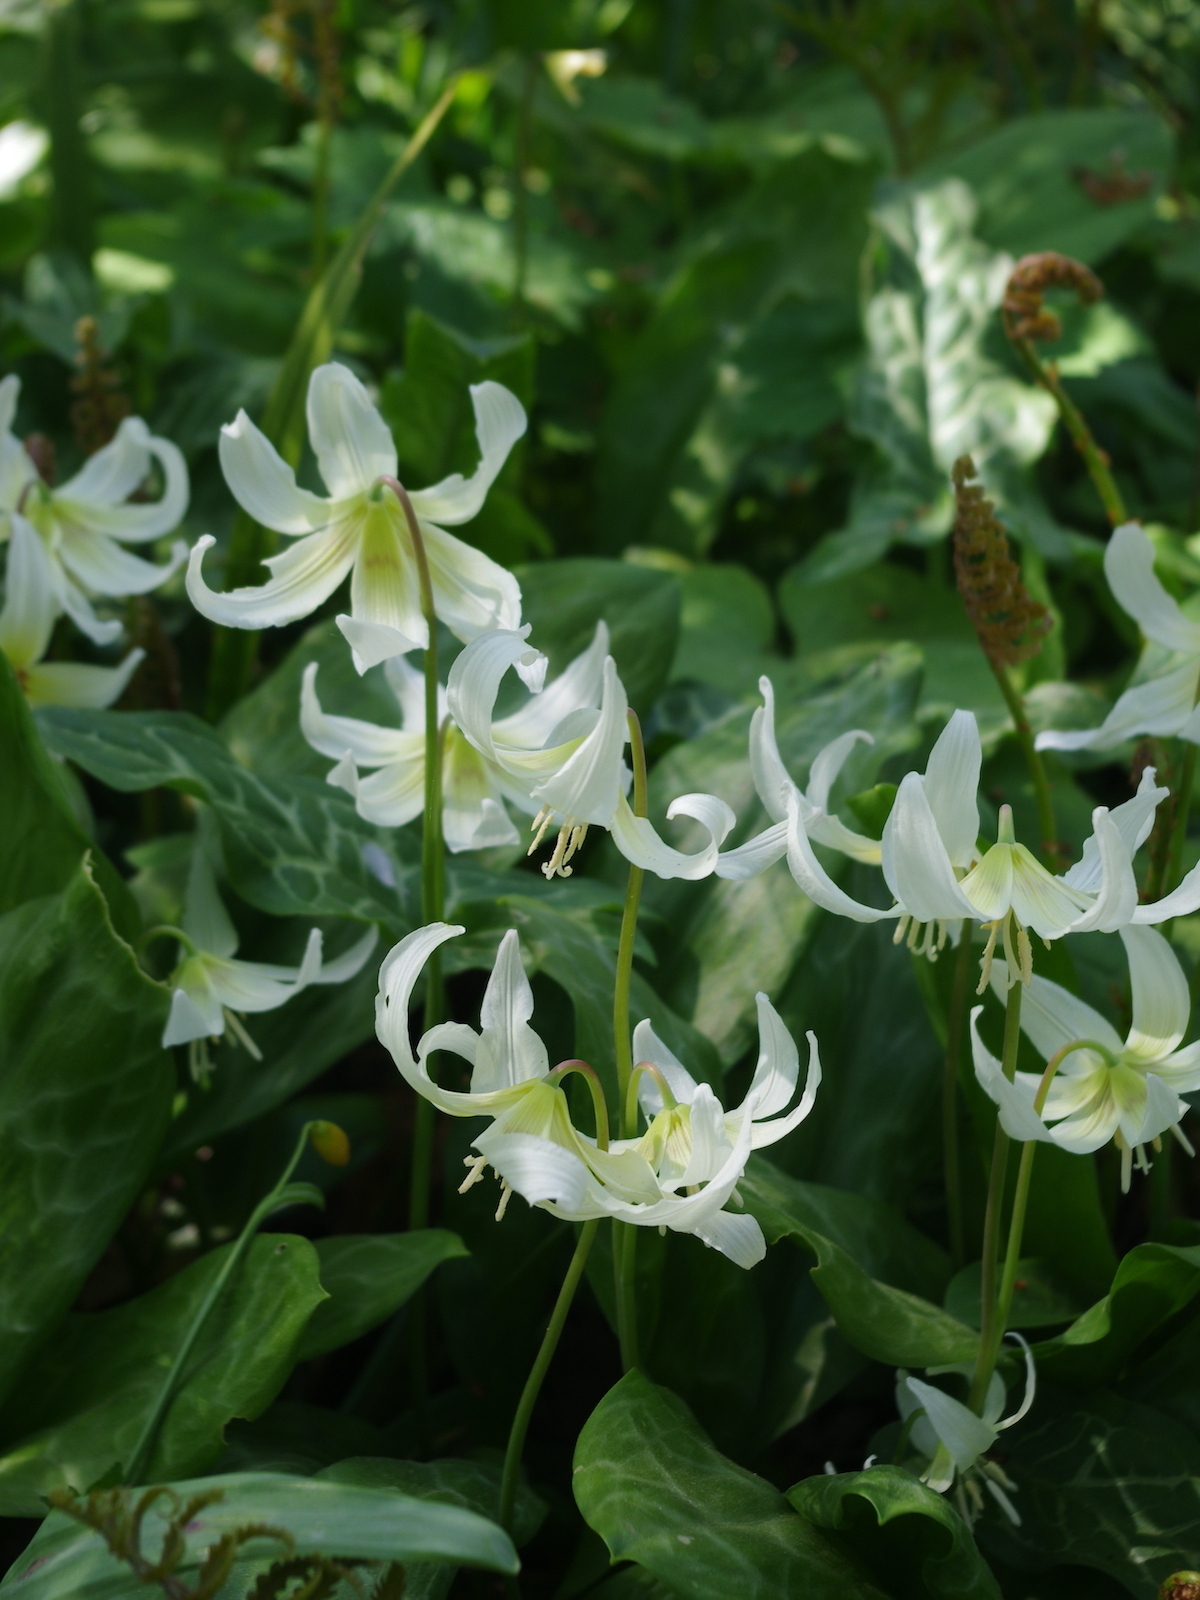 Erythronium 'White Beauty' - The Beth Chatto Gardens